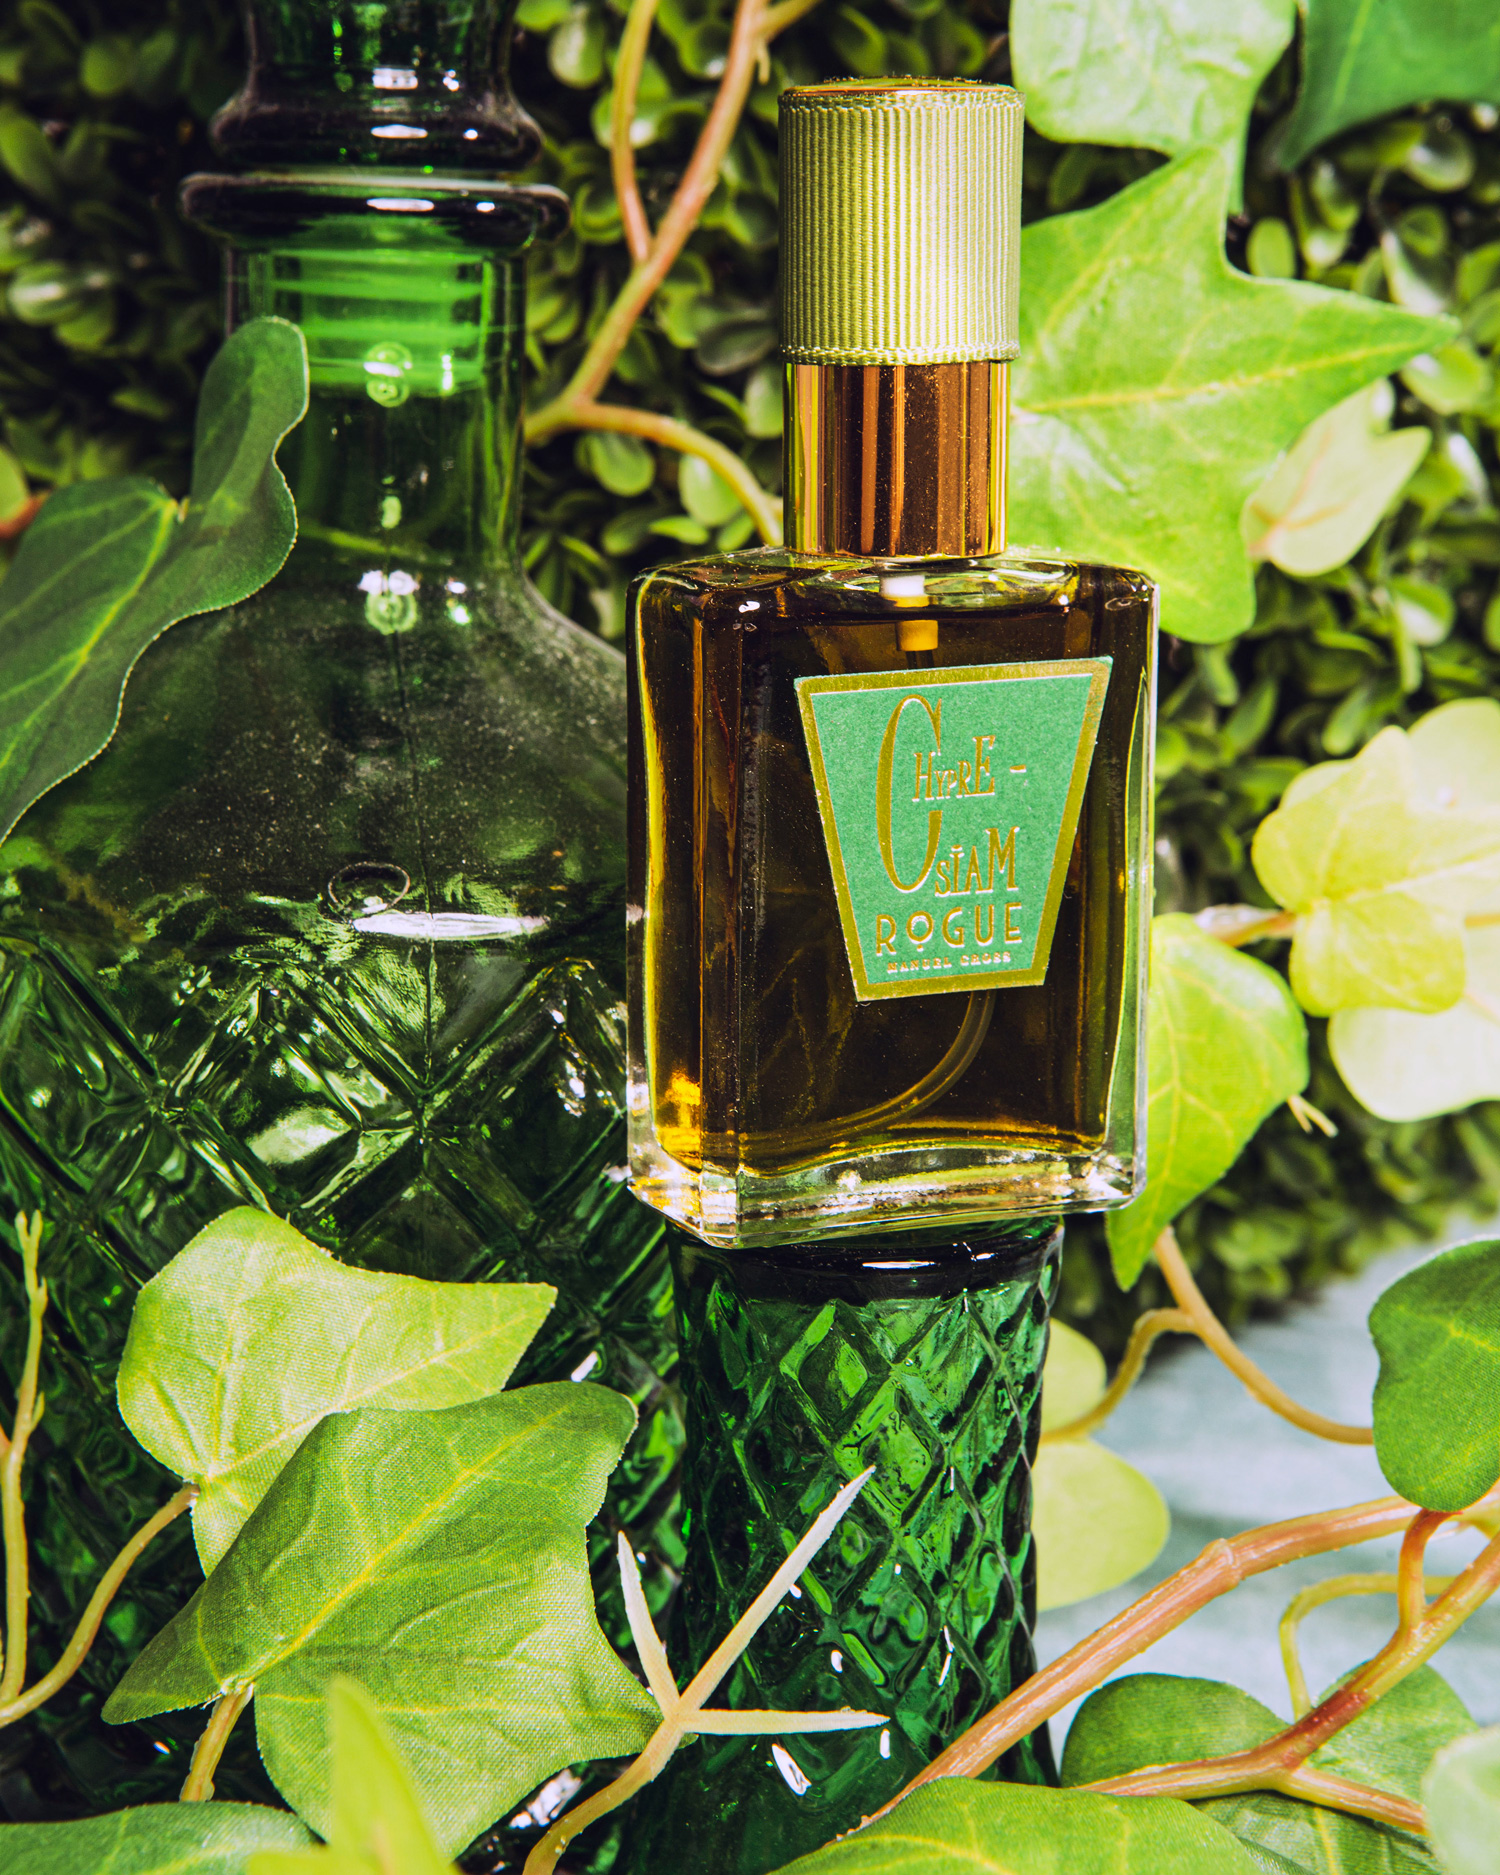 Chypre Siam by Rogue Perfumery